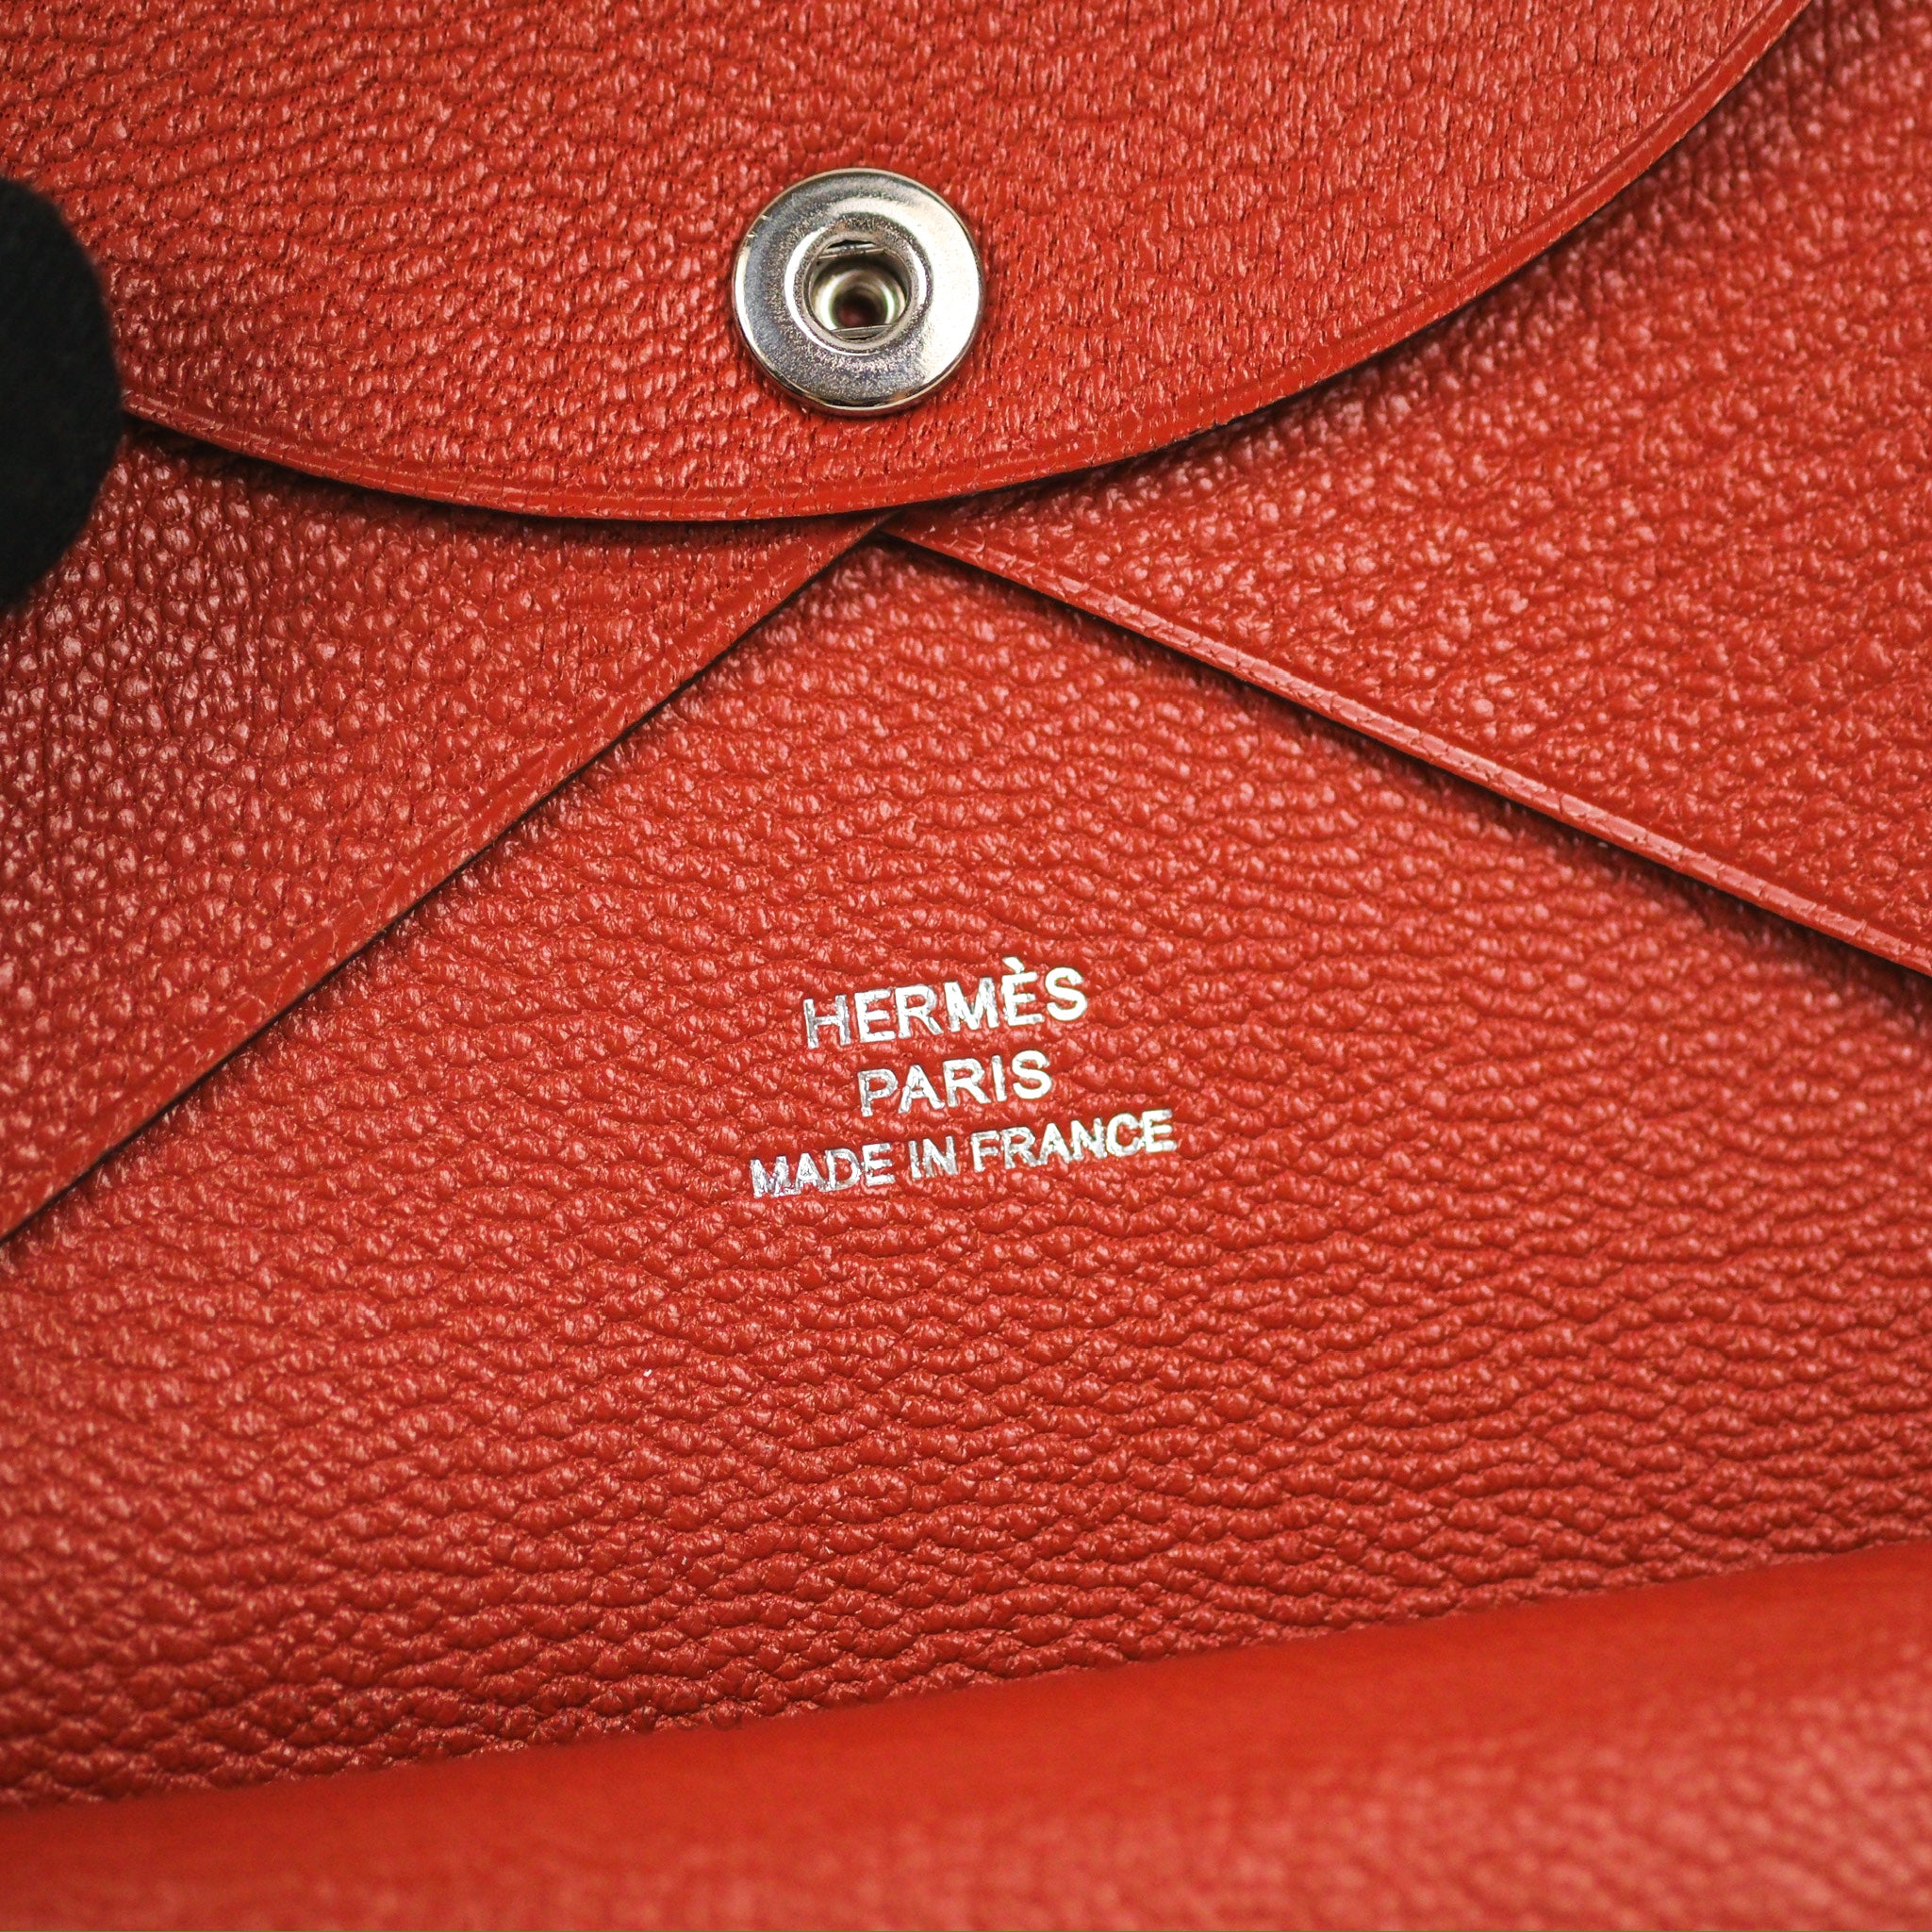 Hermès NEW HERMES CALVI CARD HOLDER GREEN MYSORE GOAT LEATHER +